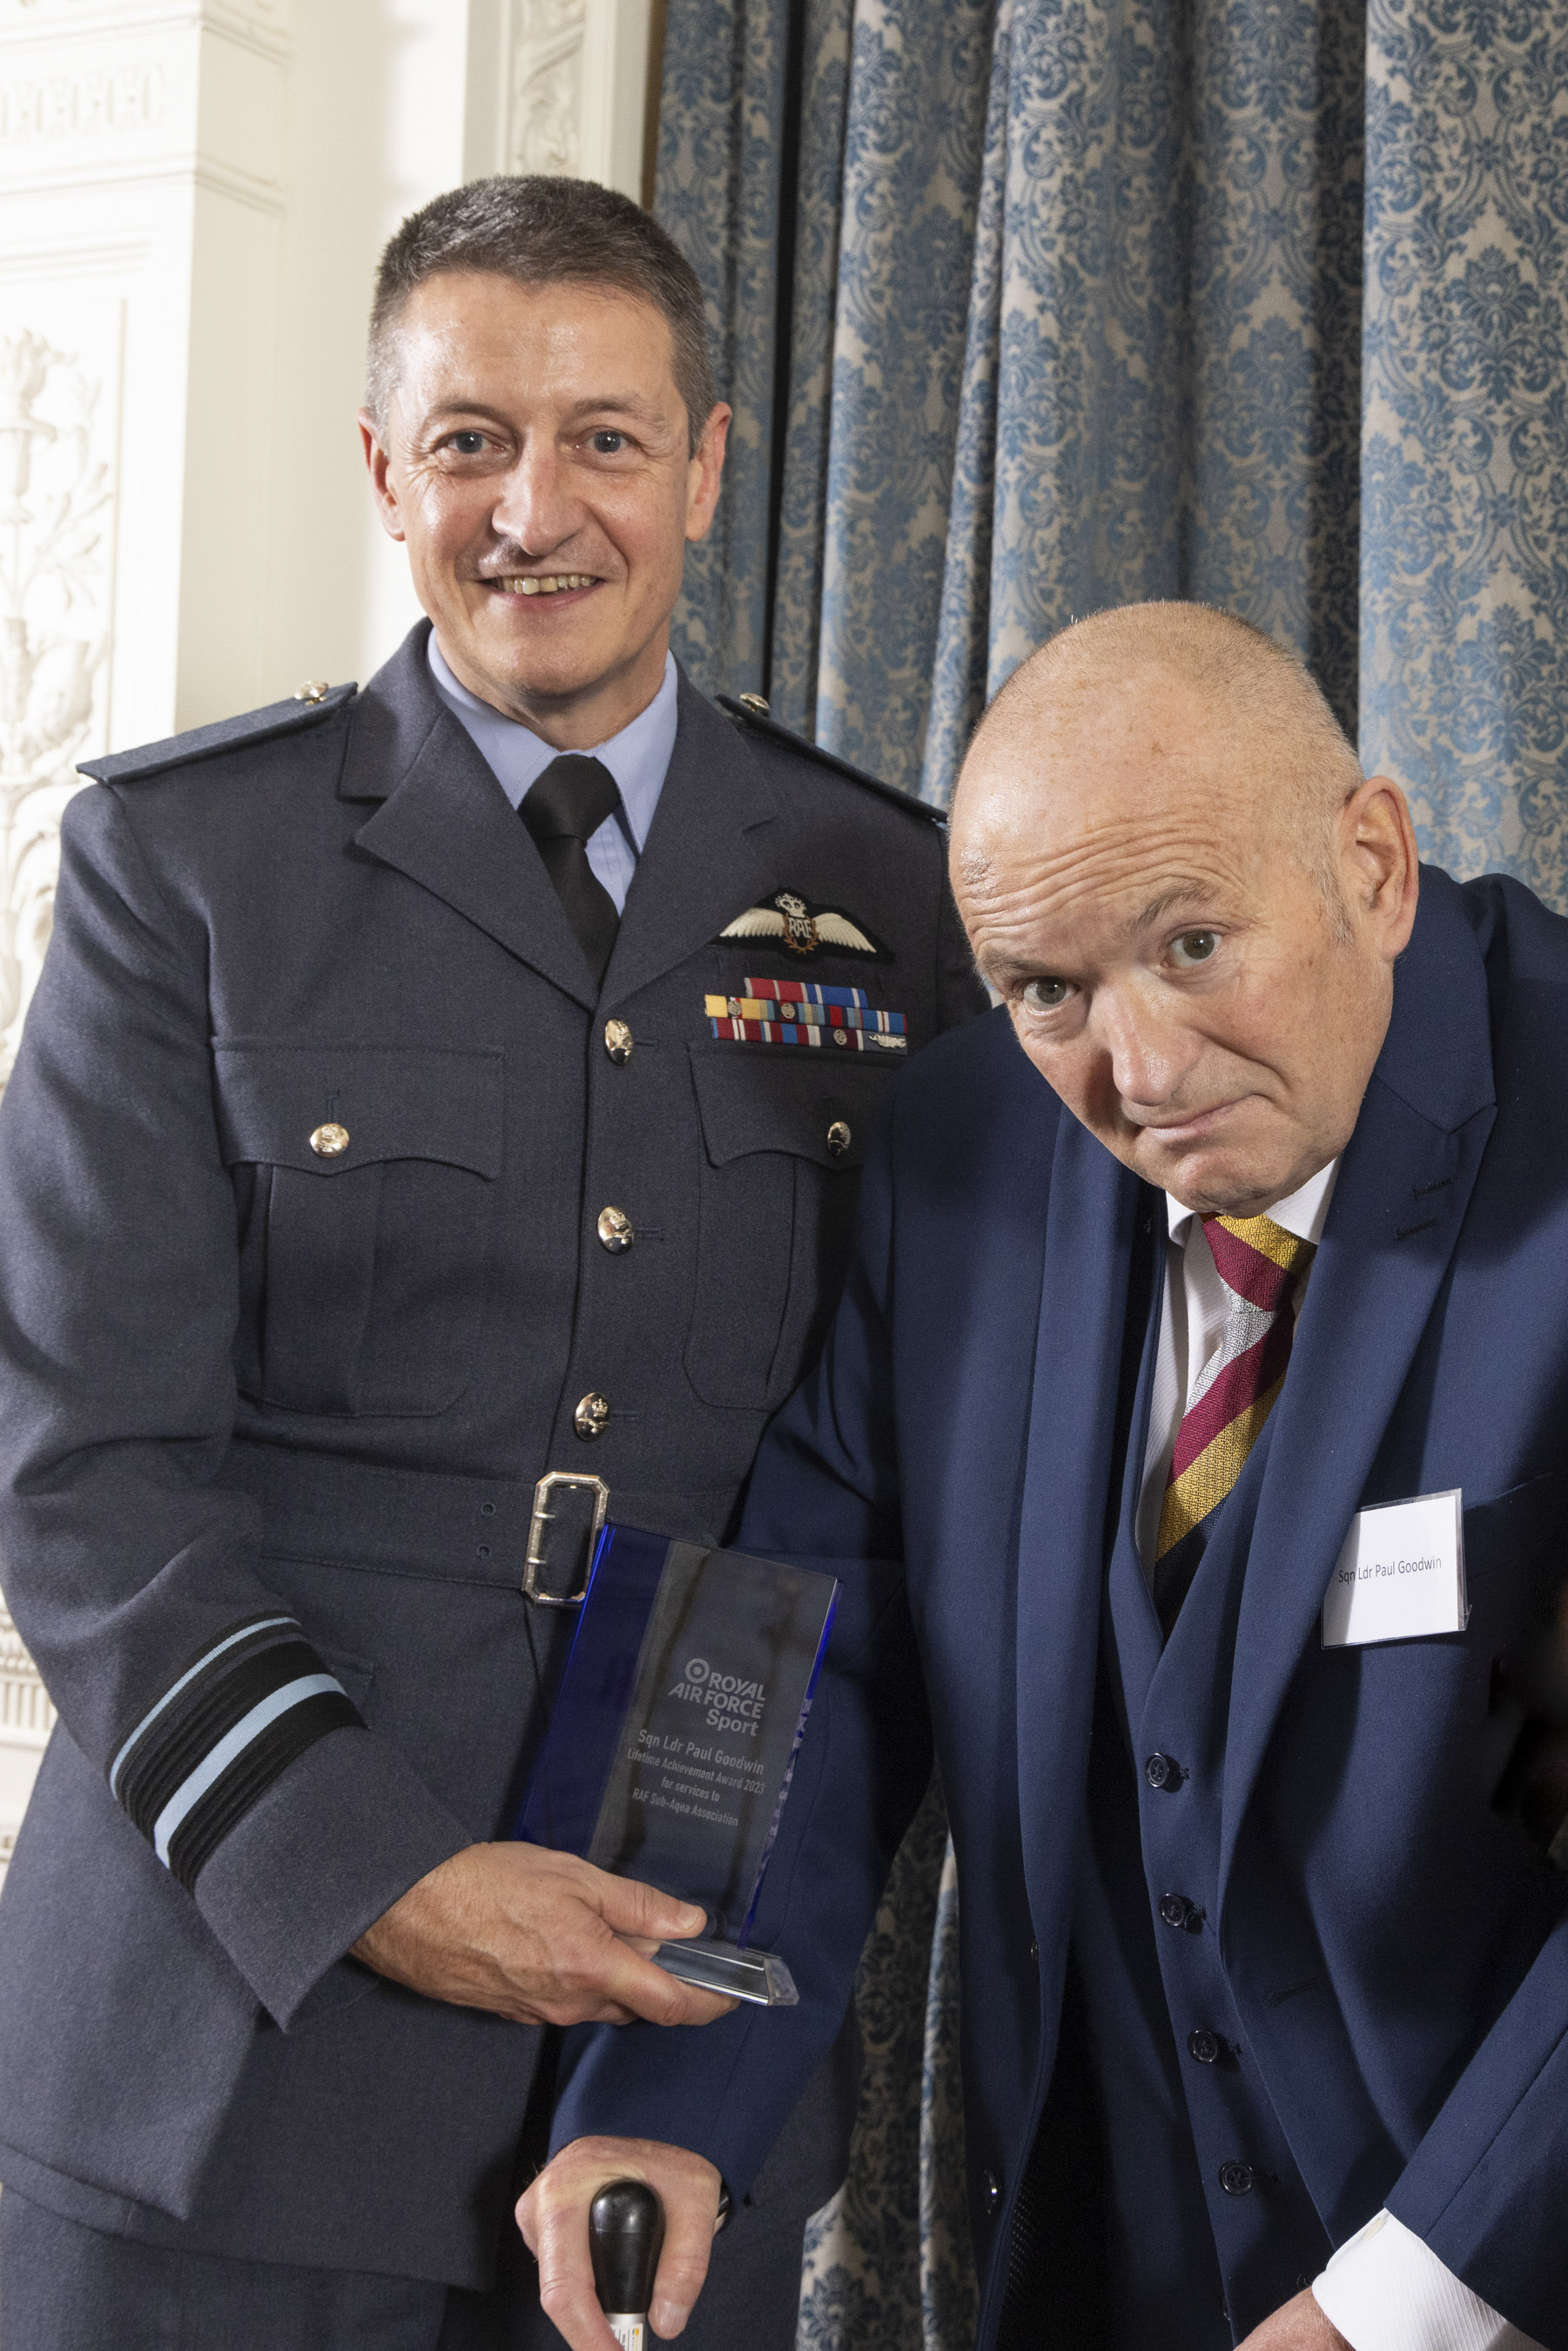 Squadron Leader Paul Goodwin receiving his award